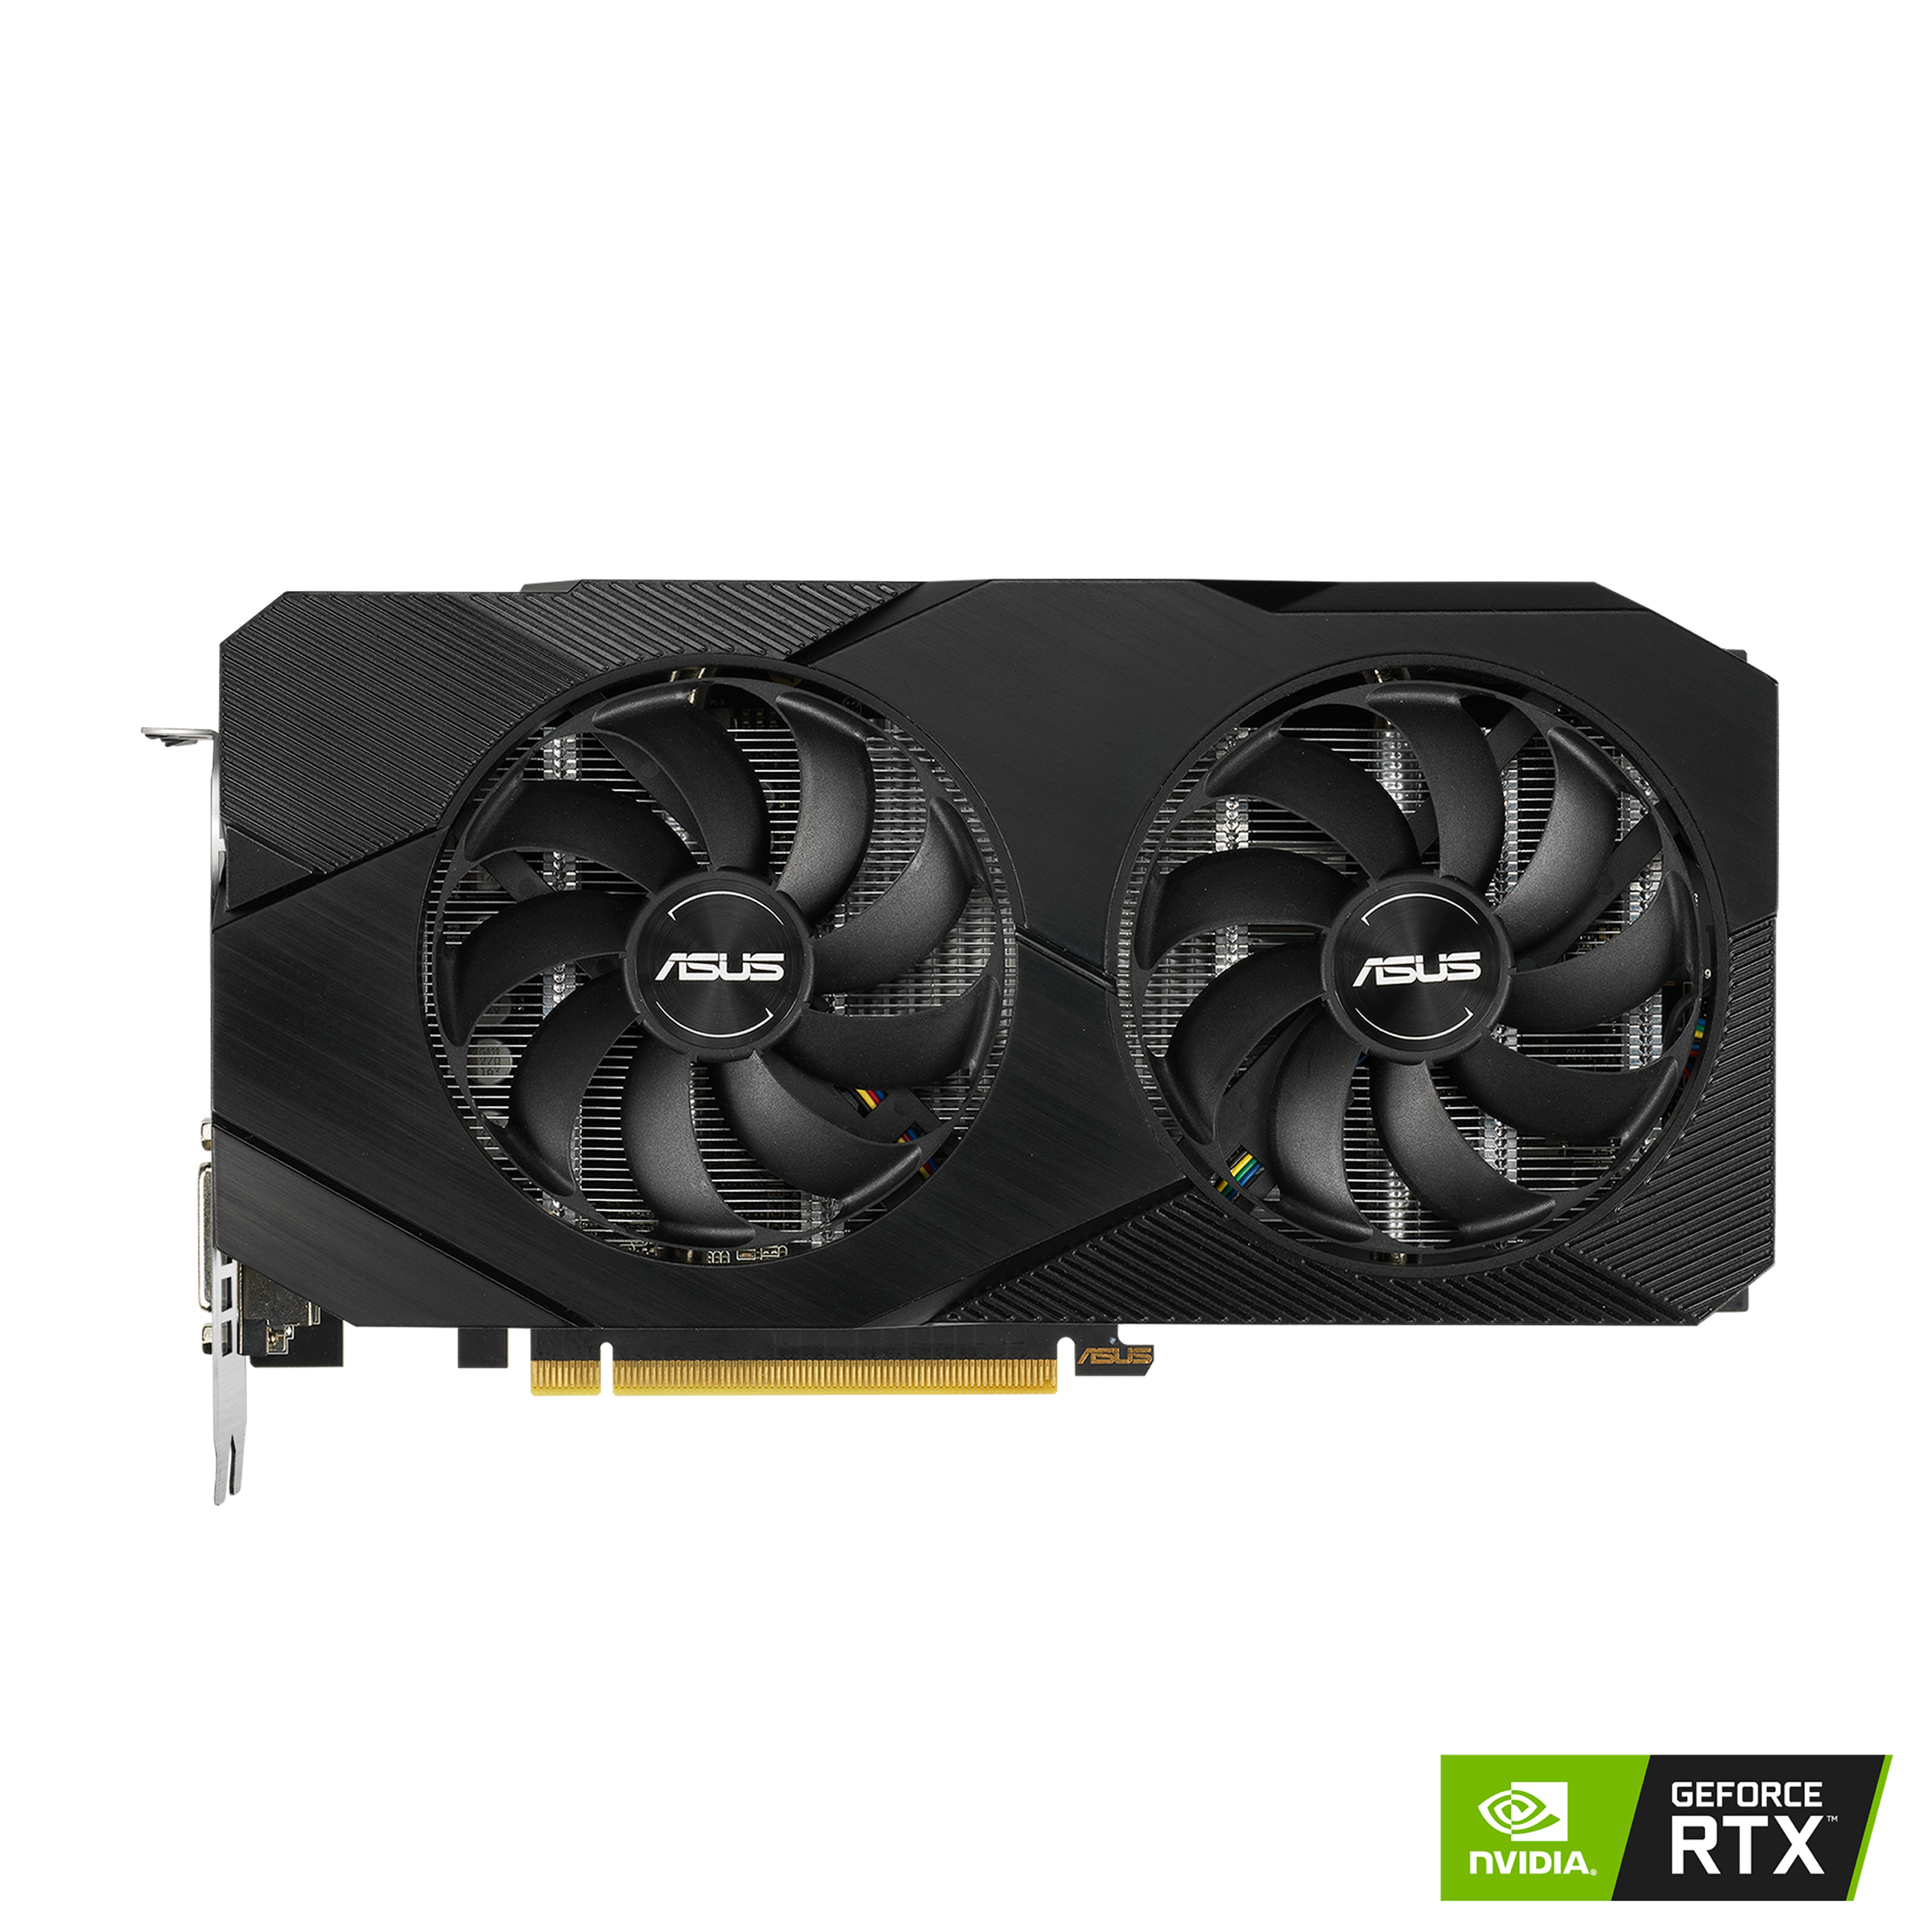 ASUS Dual GeForce RTX™ 2060 EVO 12GB GDDR6 | Graphics Card | ASUS 